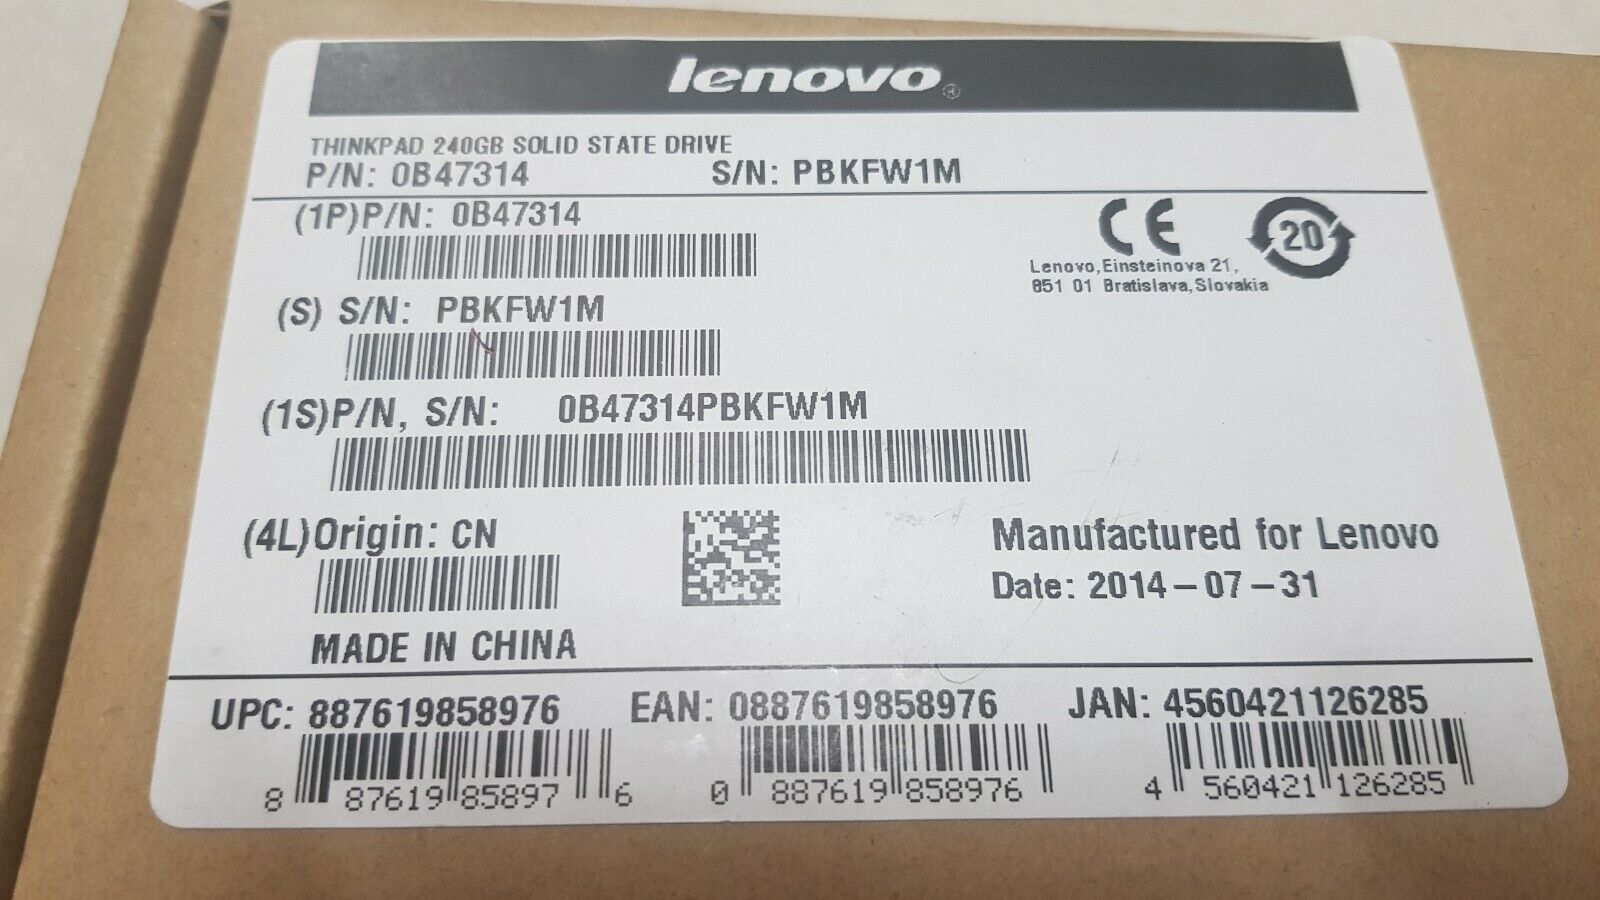 Genuine Lenovo ThinkPad 240GB Solid State Drive HDD 0B47314 Brand New See Pics